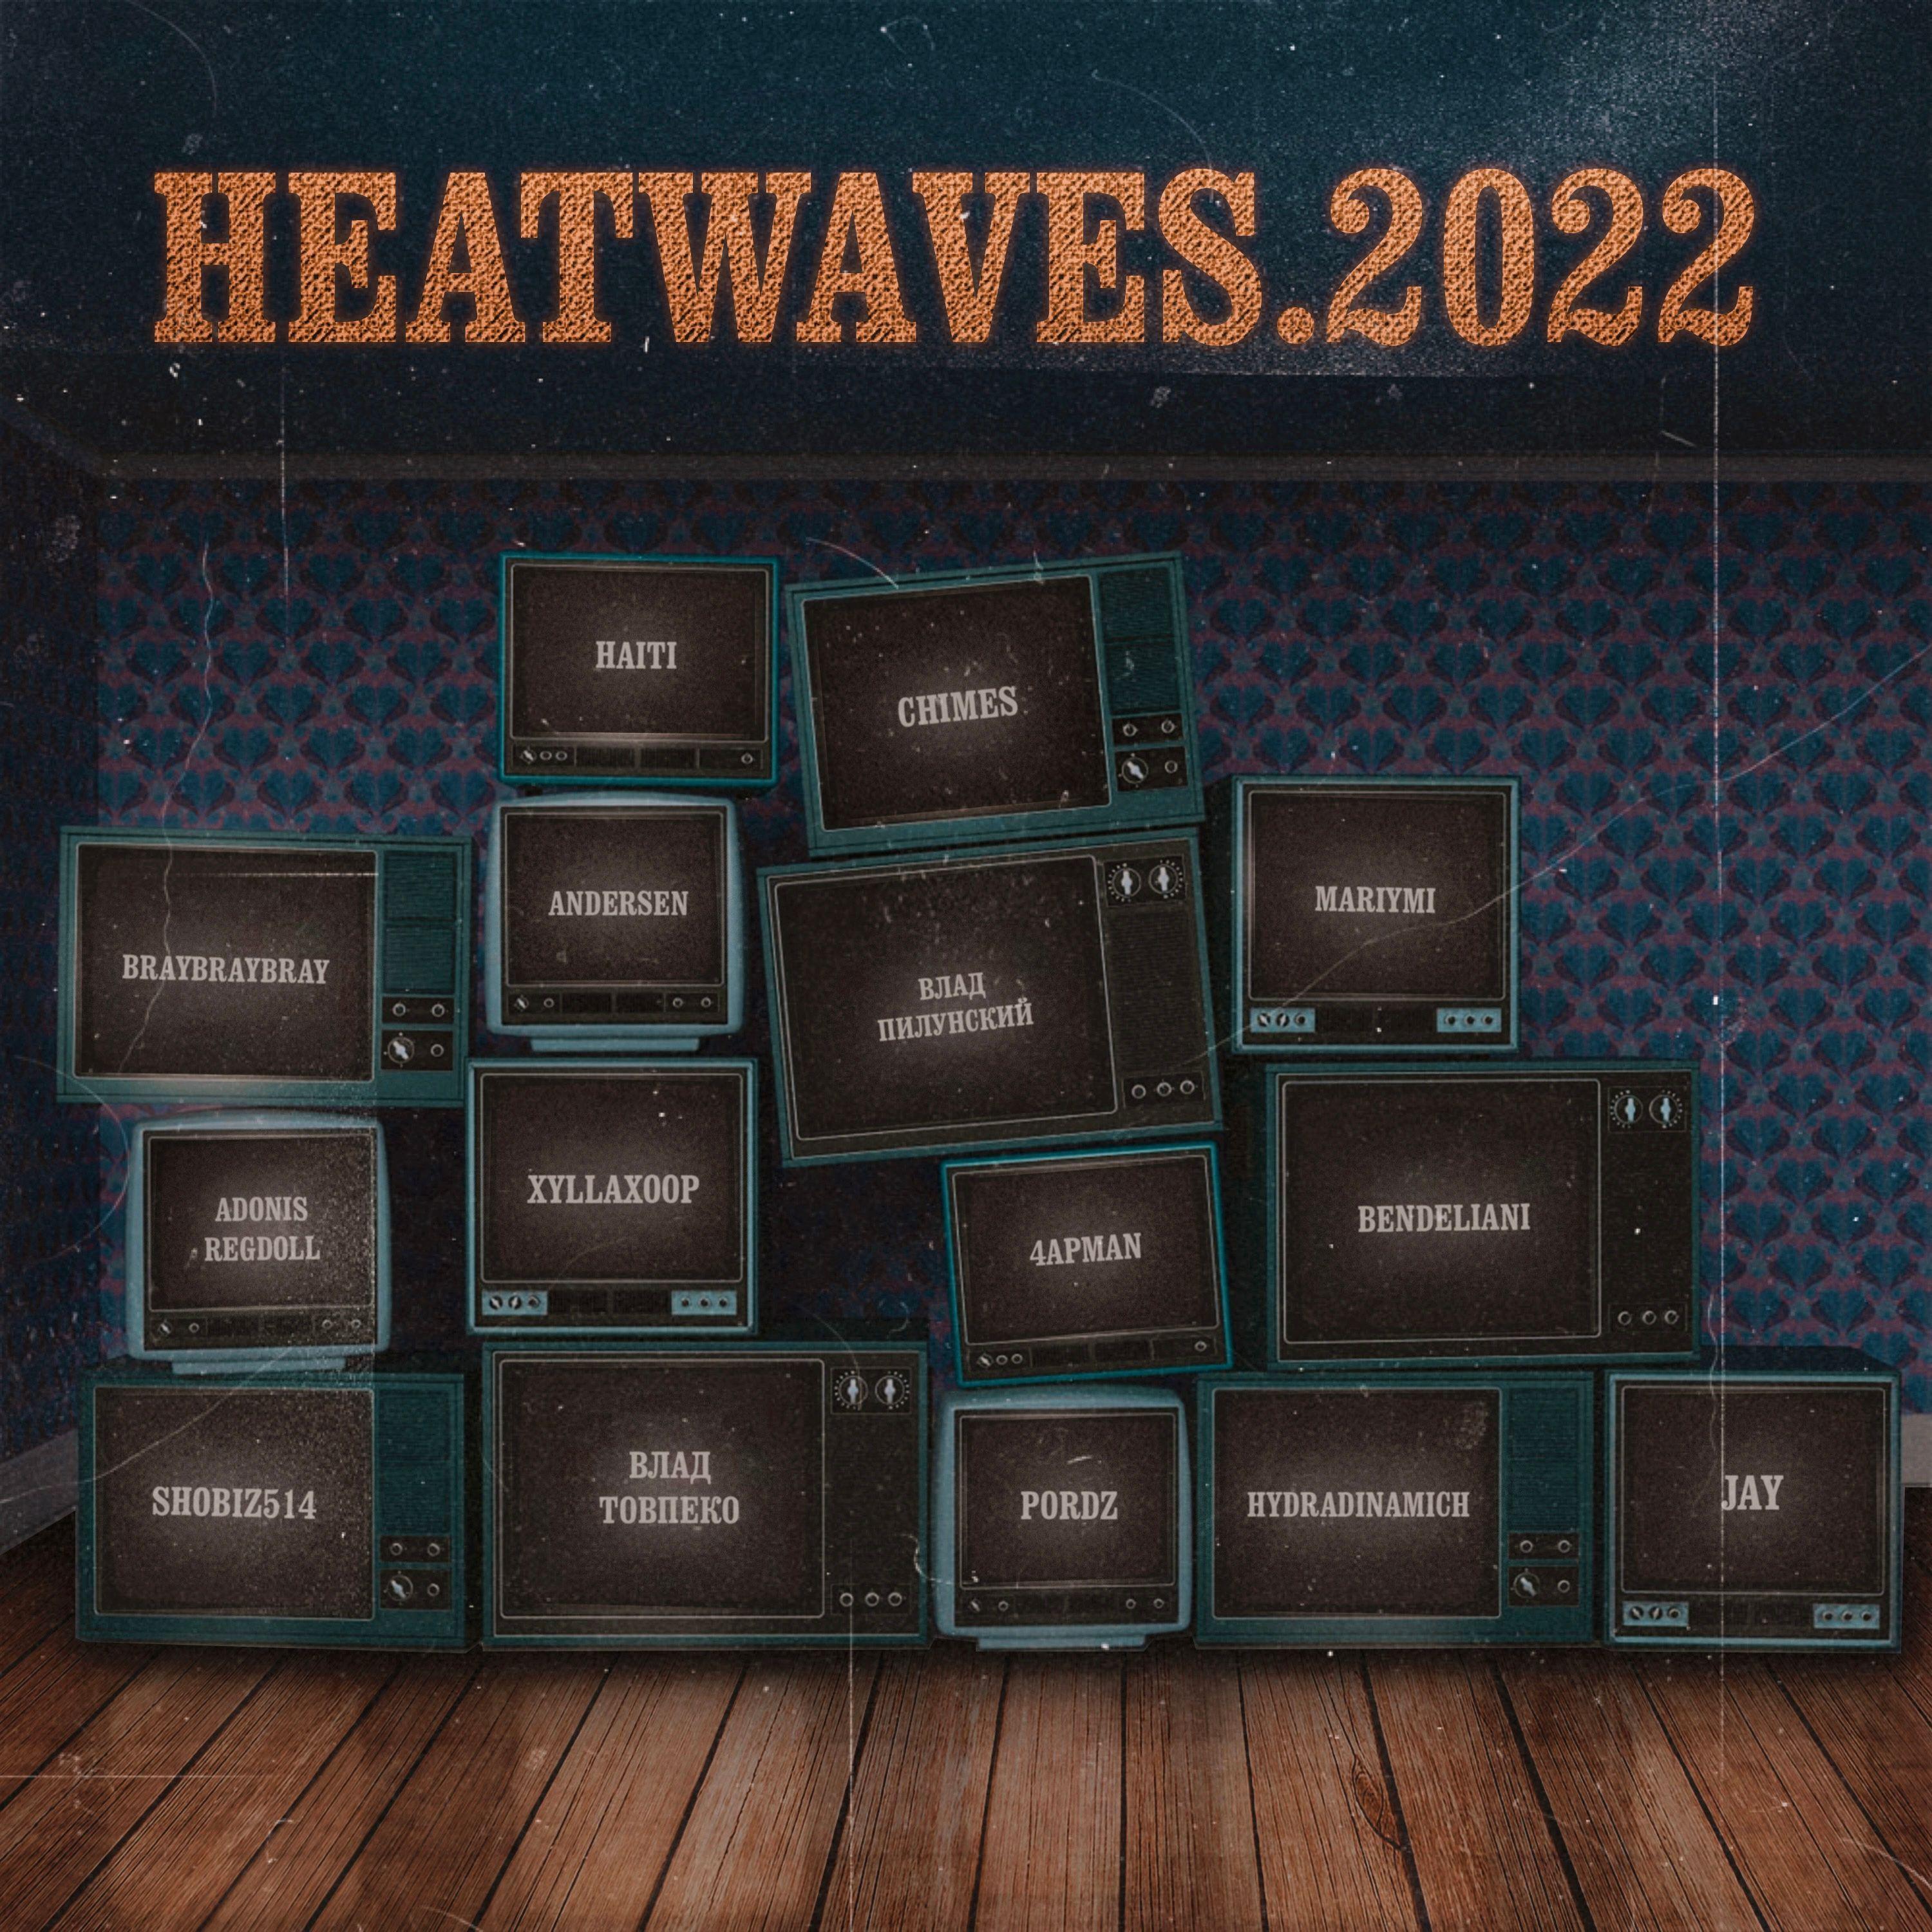 Chimes - HEATWAVES.2022